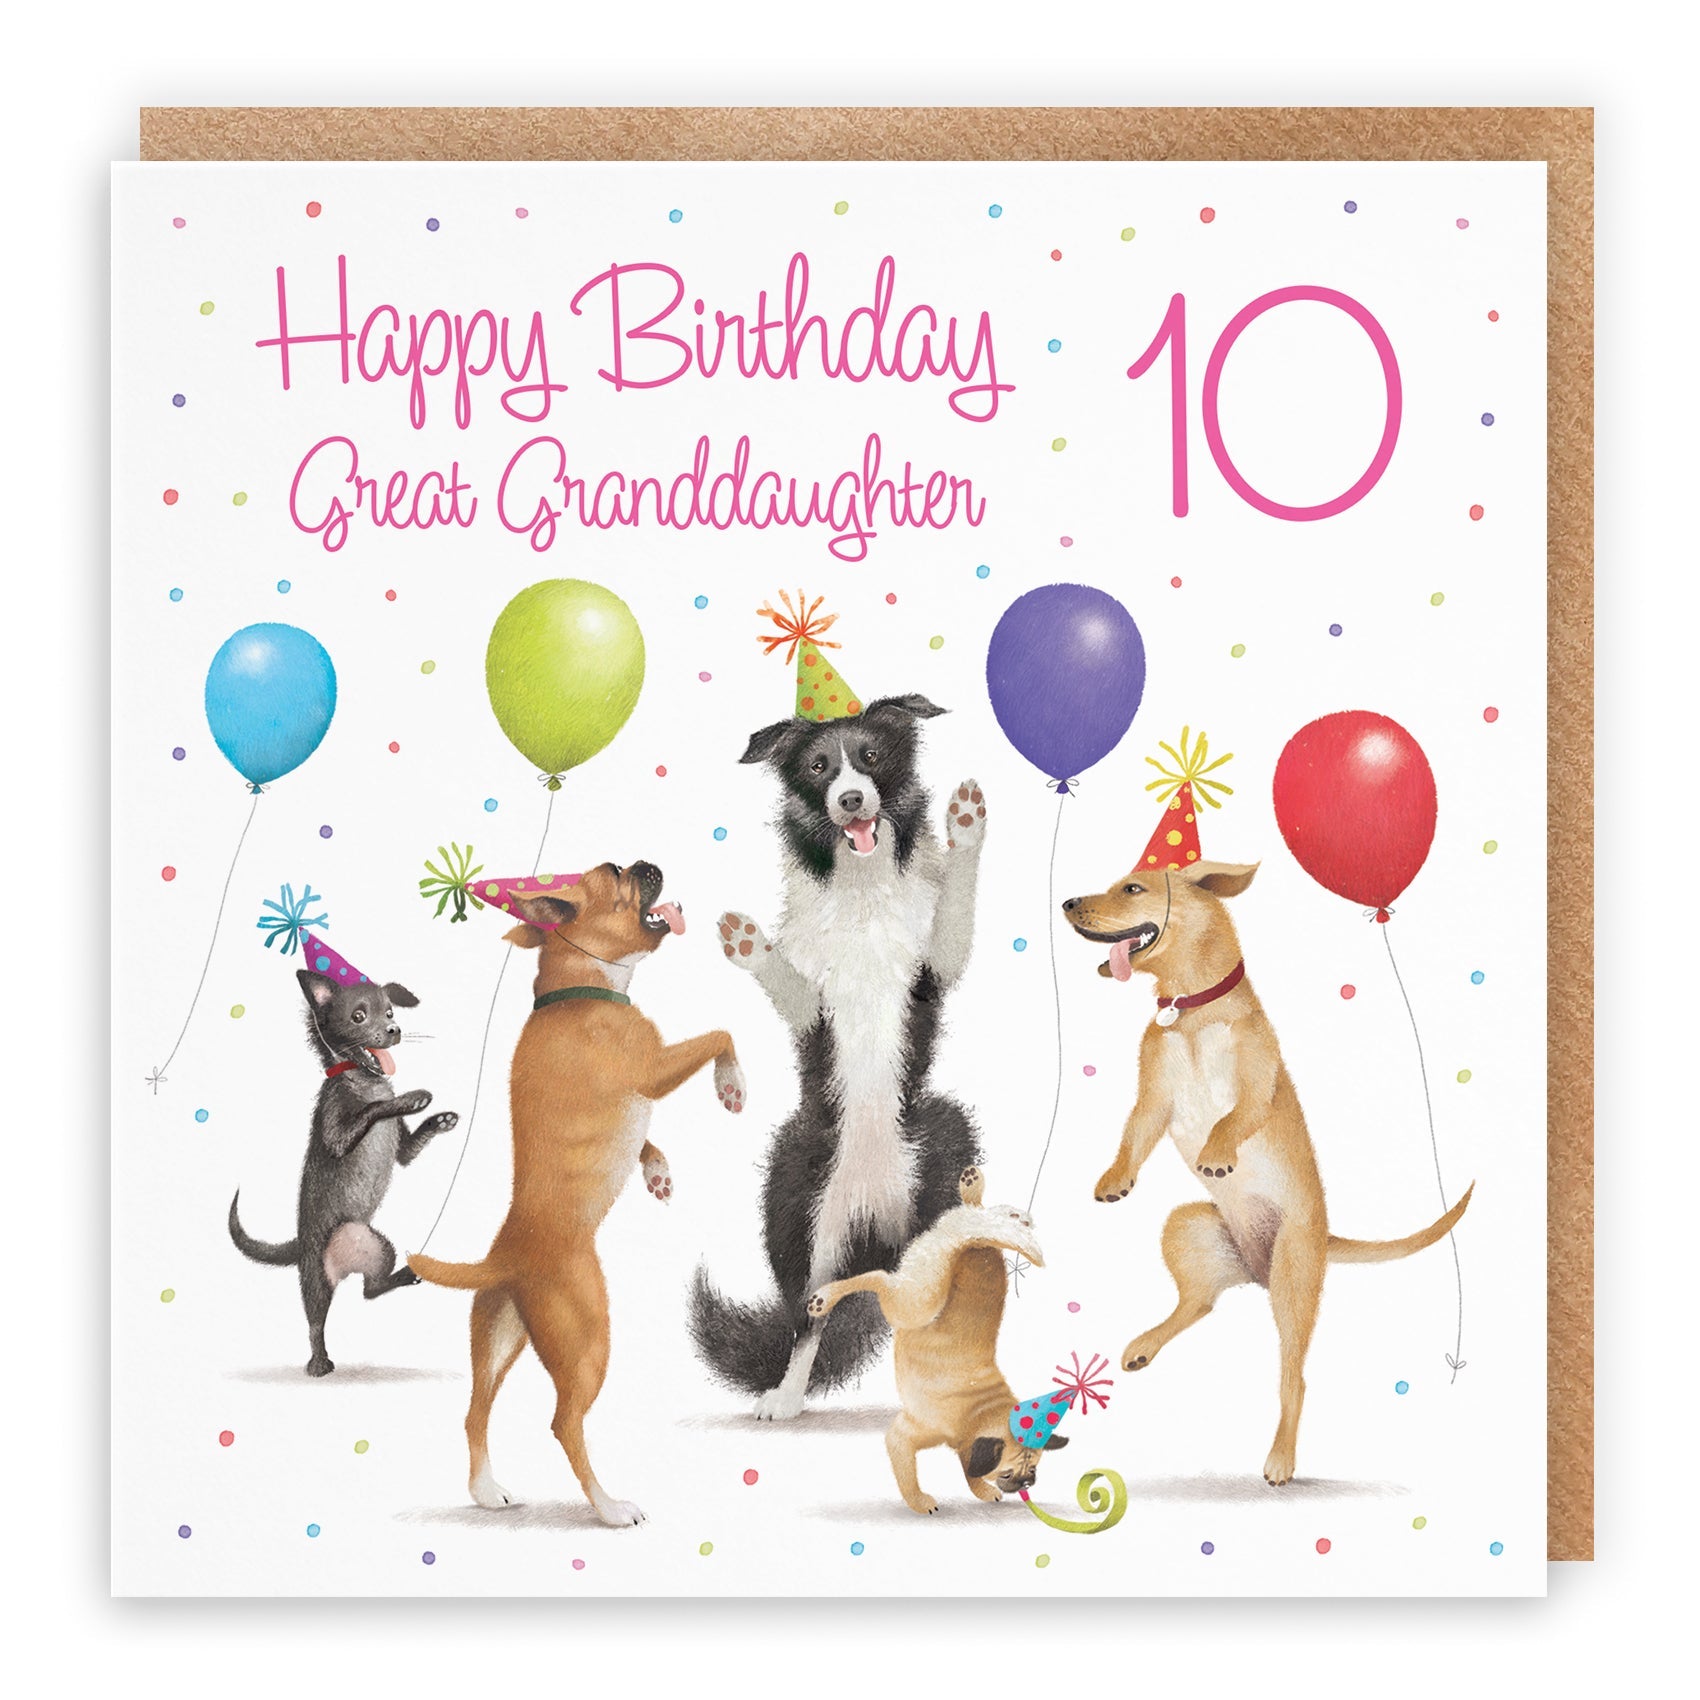 Great Granddaughter Birthday Cards